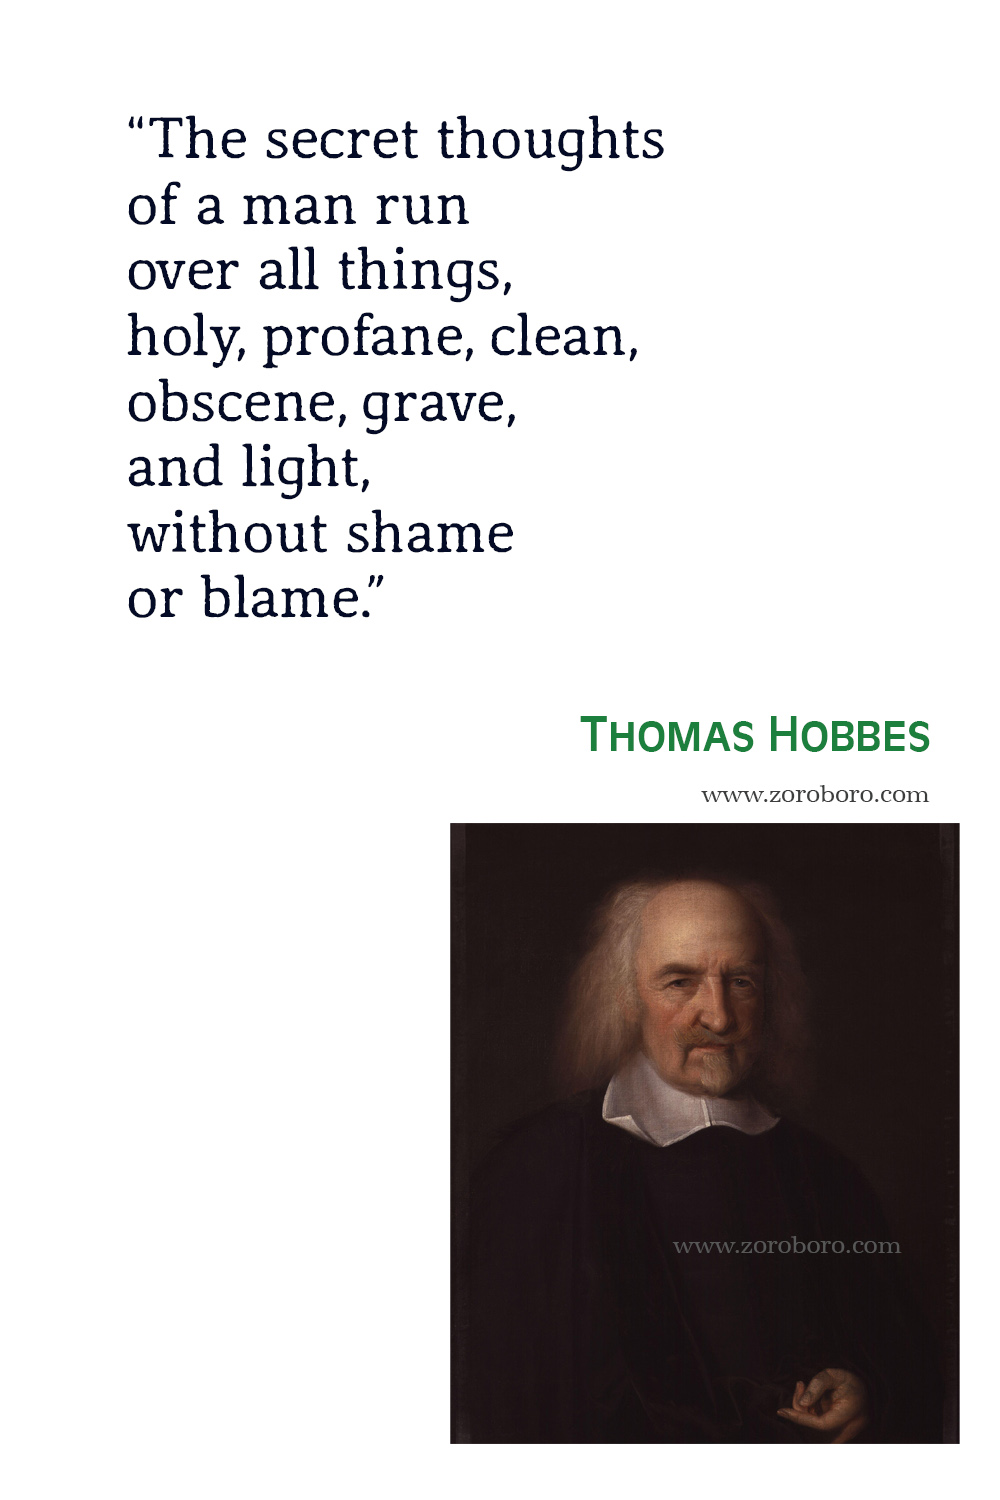 Thomas Hobbes Quotes, Thomas Hobbes Theory, Thomas Hobbes Books Quotes, Thomas Hobbes Leviathan Quotes. Thomas Hobbes